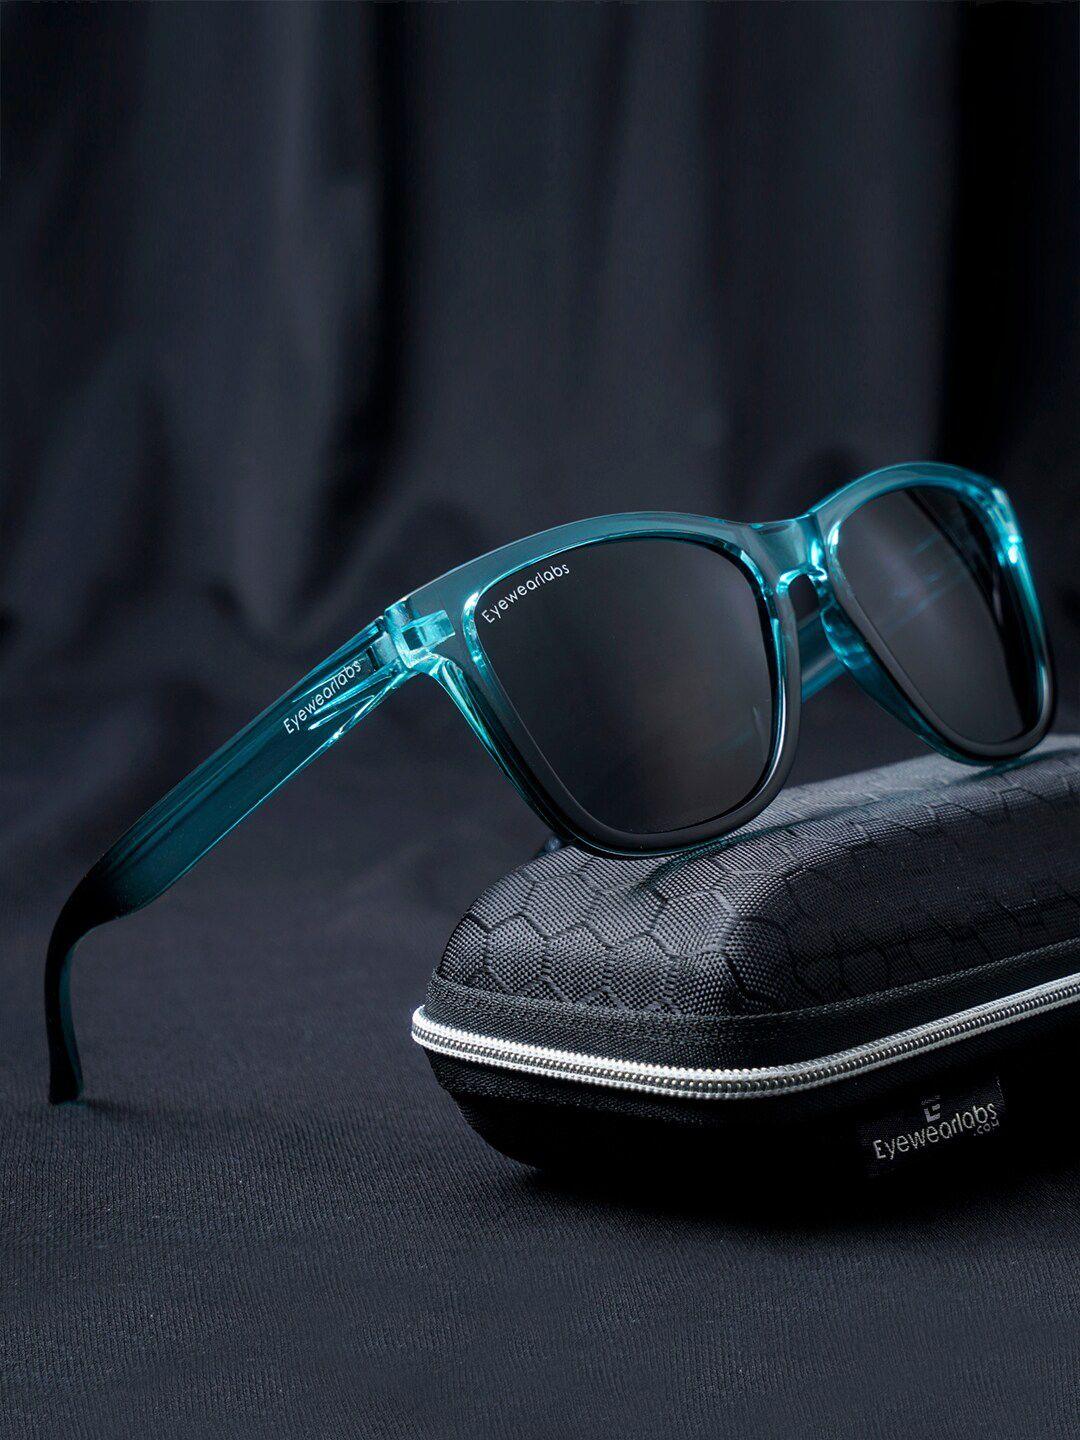 eyewearlabs unisex black lens & blue oversized sunglasses with polarised and uv protected lens